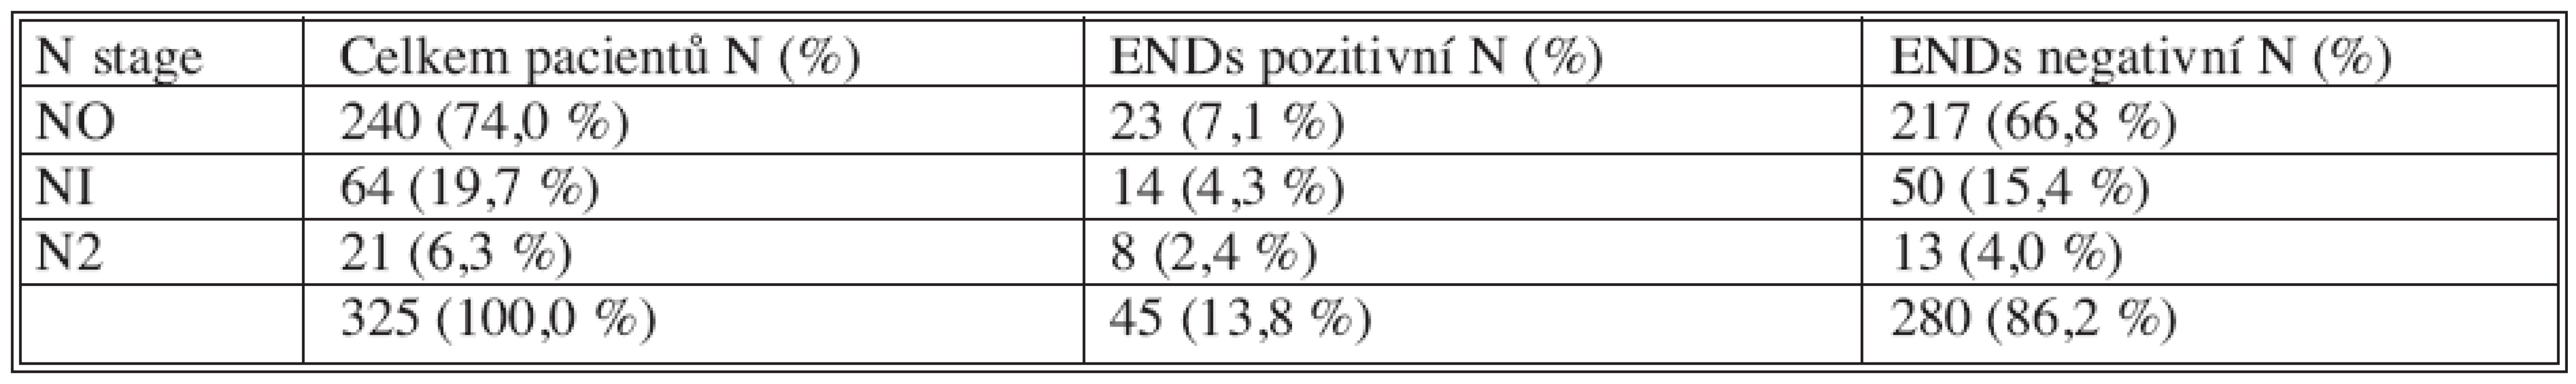 Výskyt ENDs v závislosti na počtu postižených uzlin (P = 0,005)
Tab. 2. Occurrence of ENDs according number of lymf node metastase